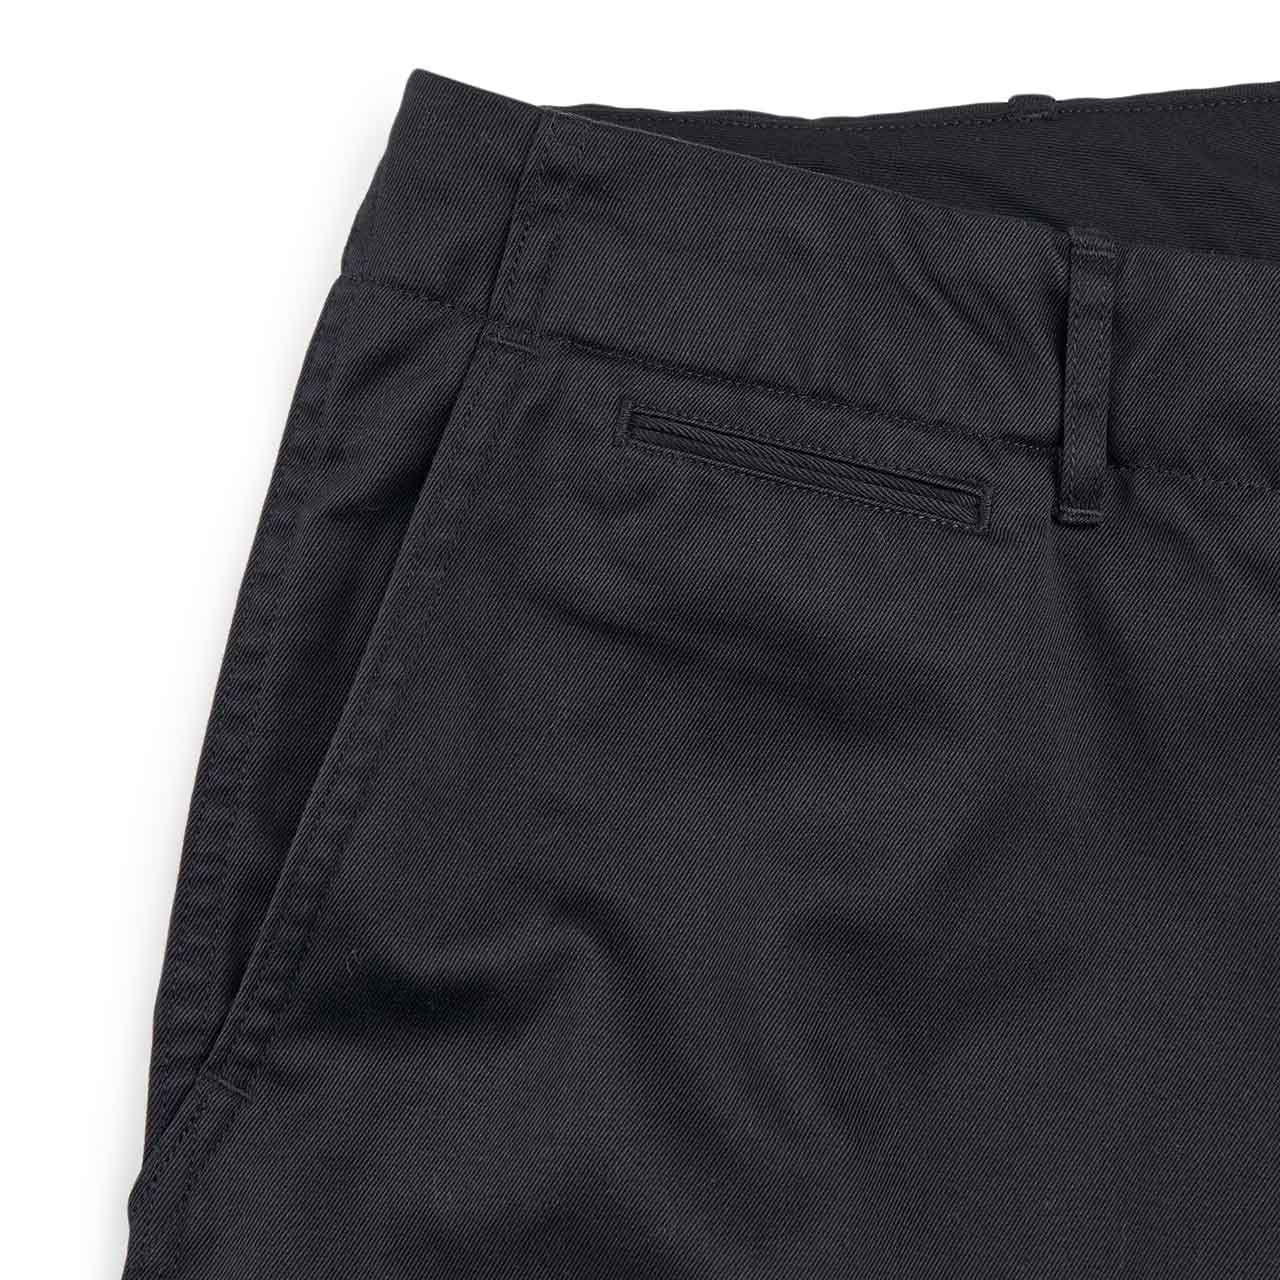 nanamica wide chino pants (black)